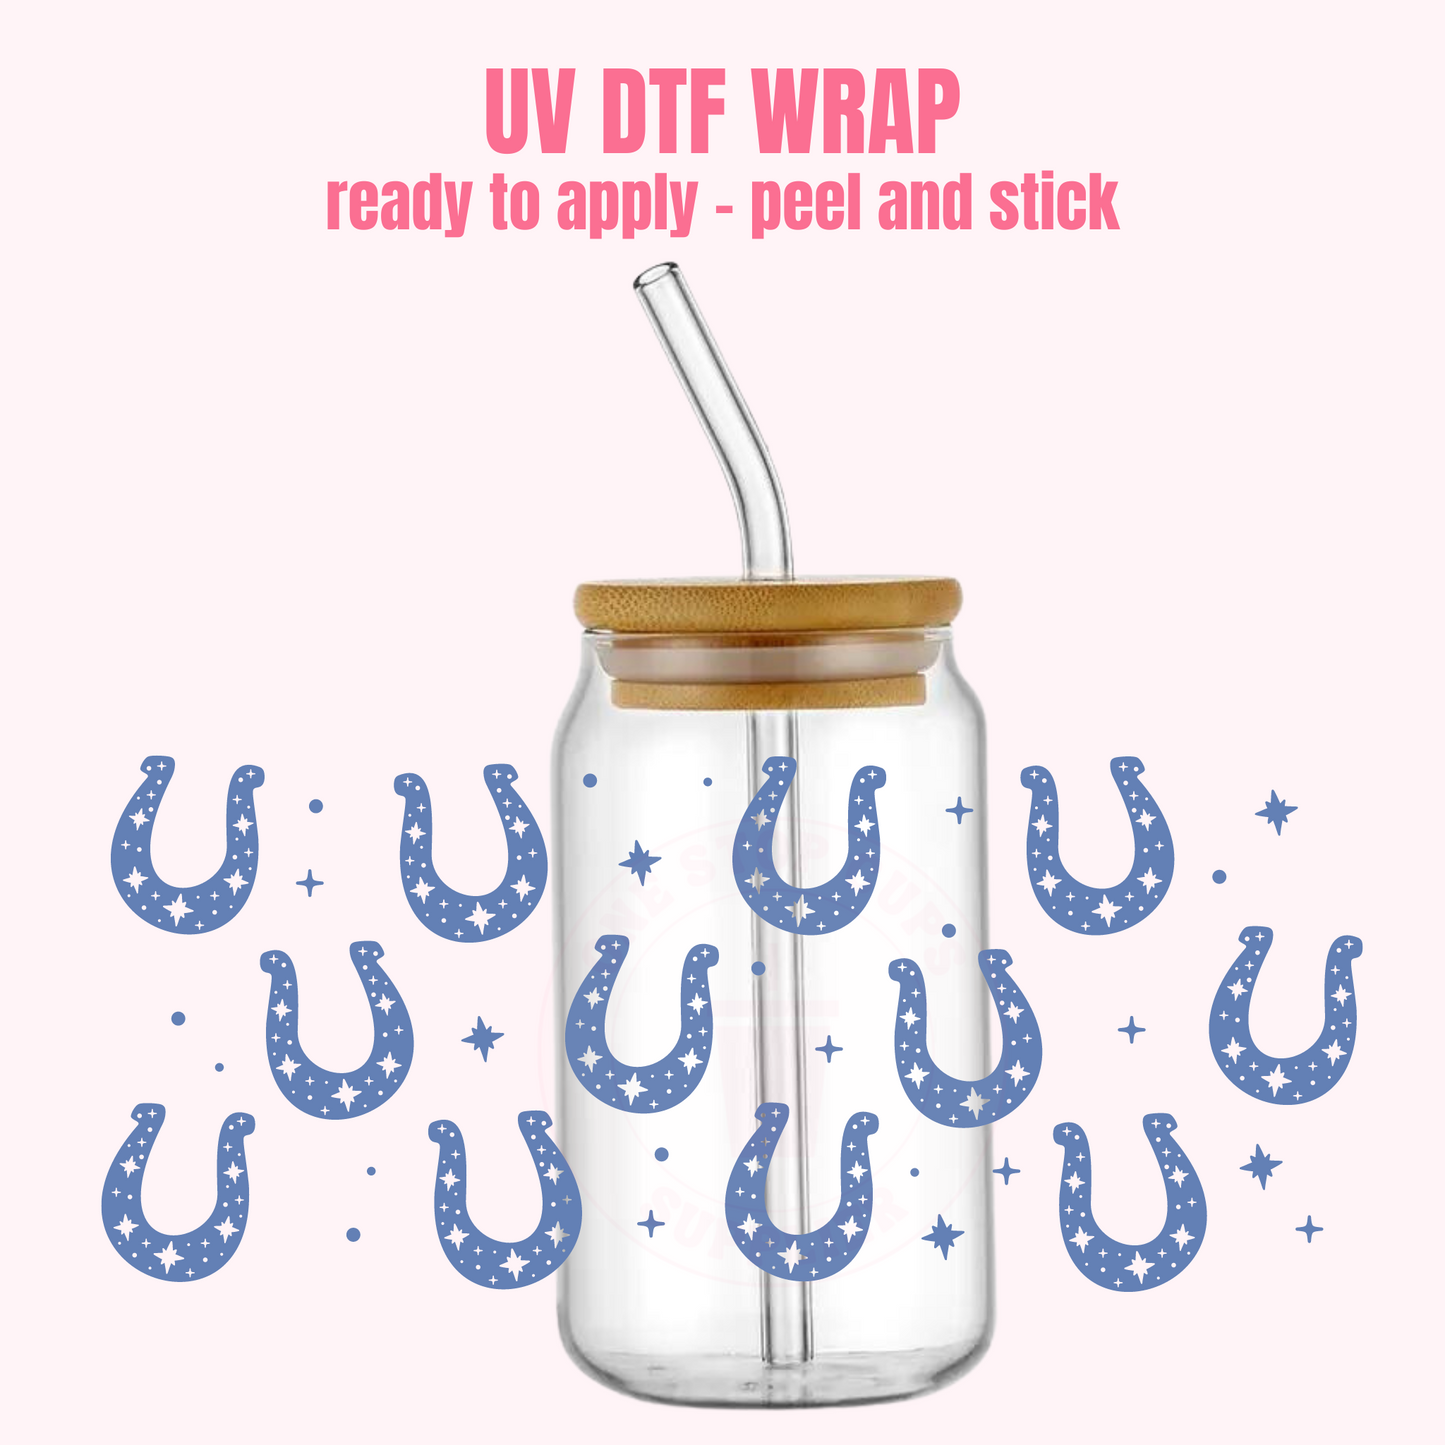 UV DTF CUP WRAP C8